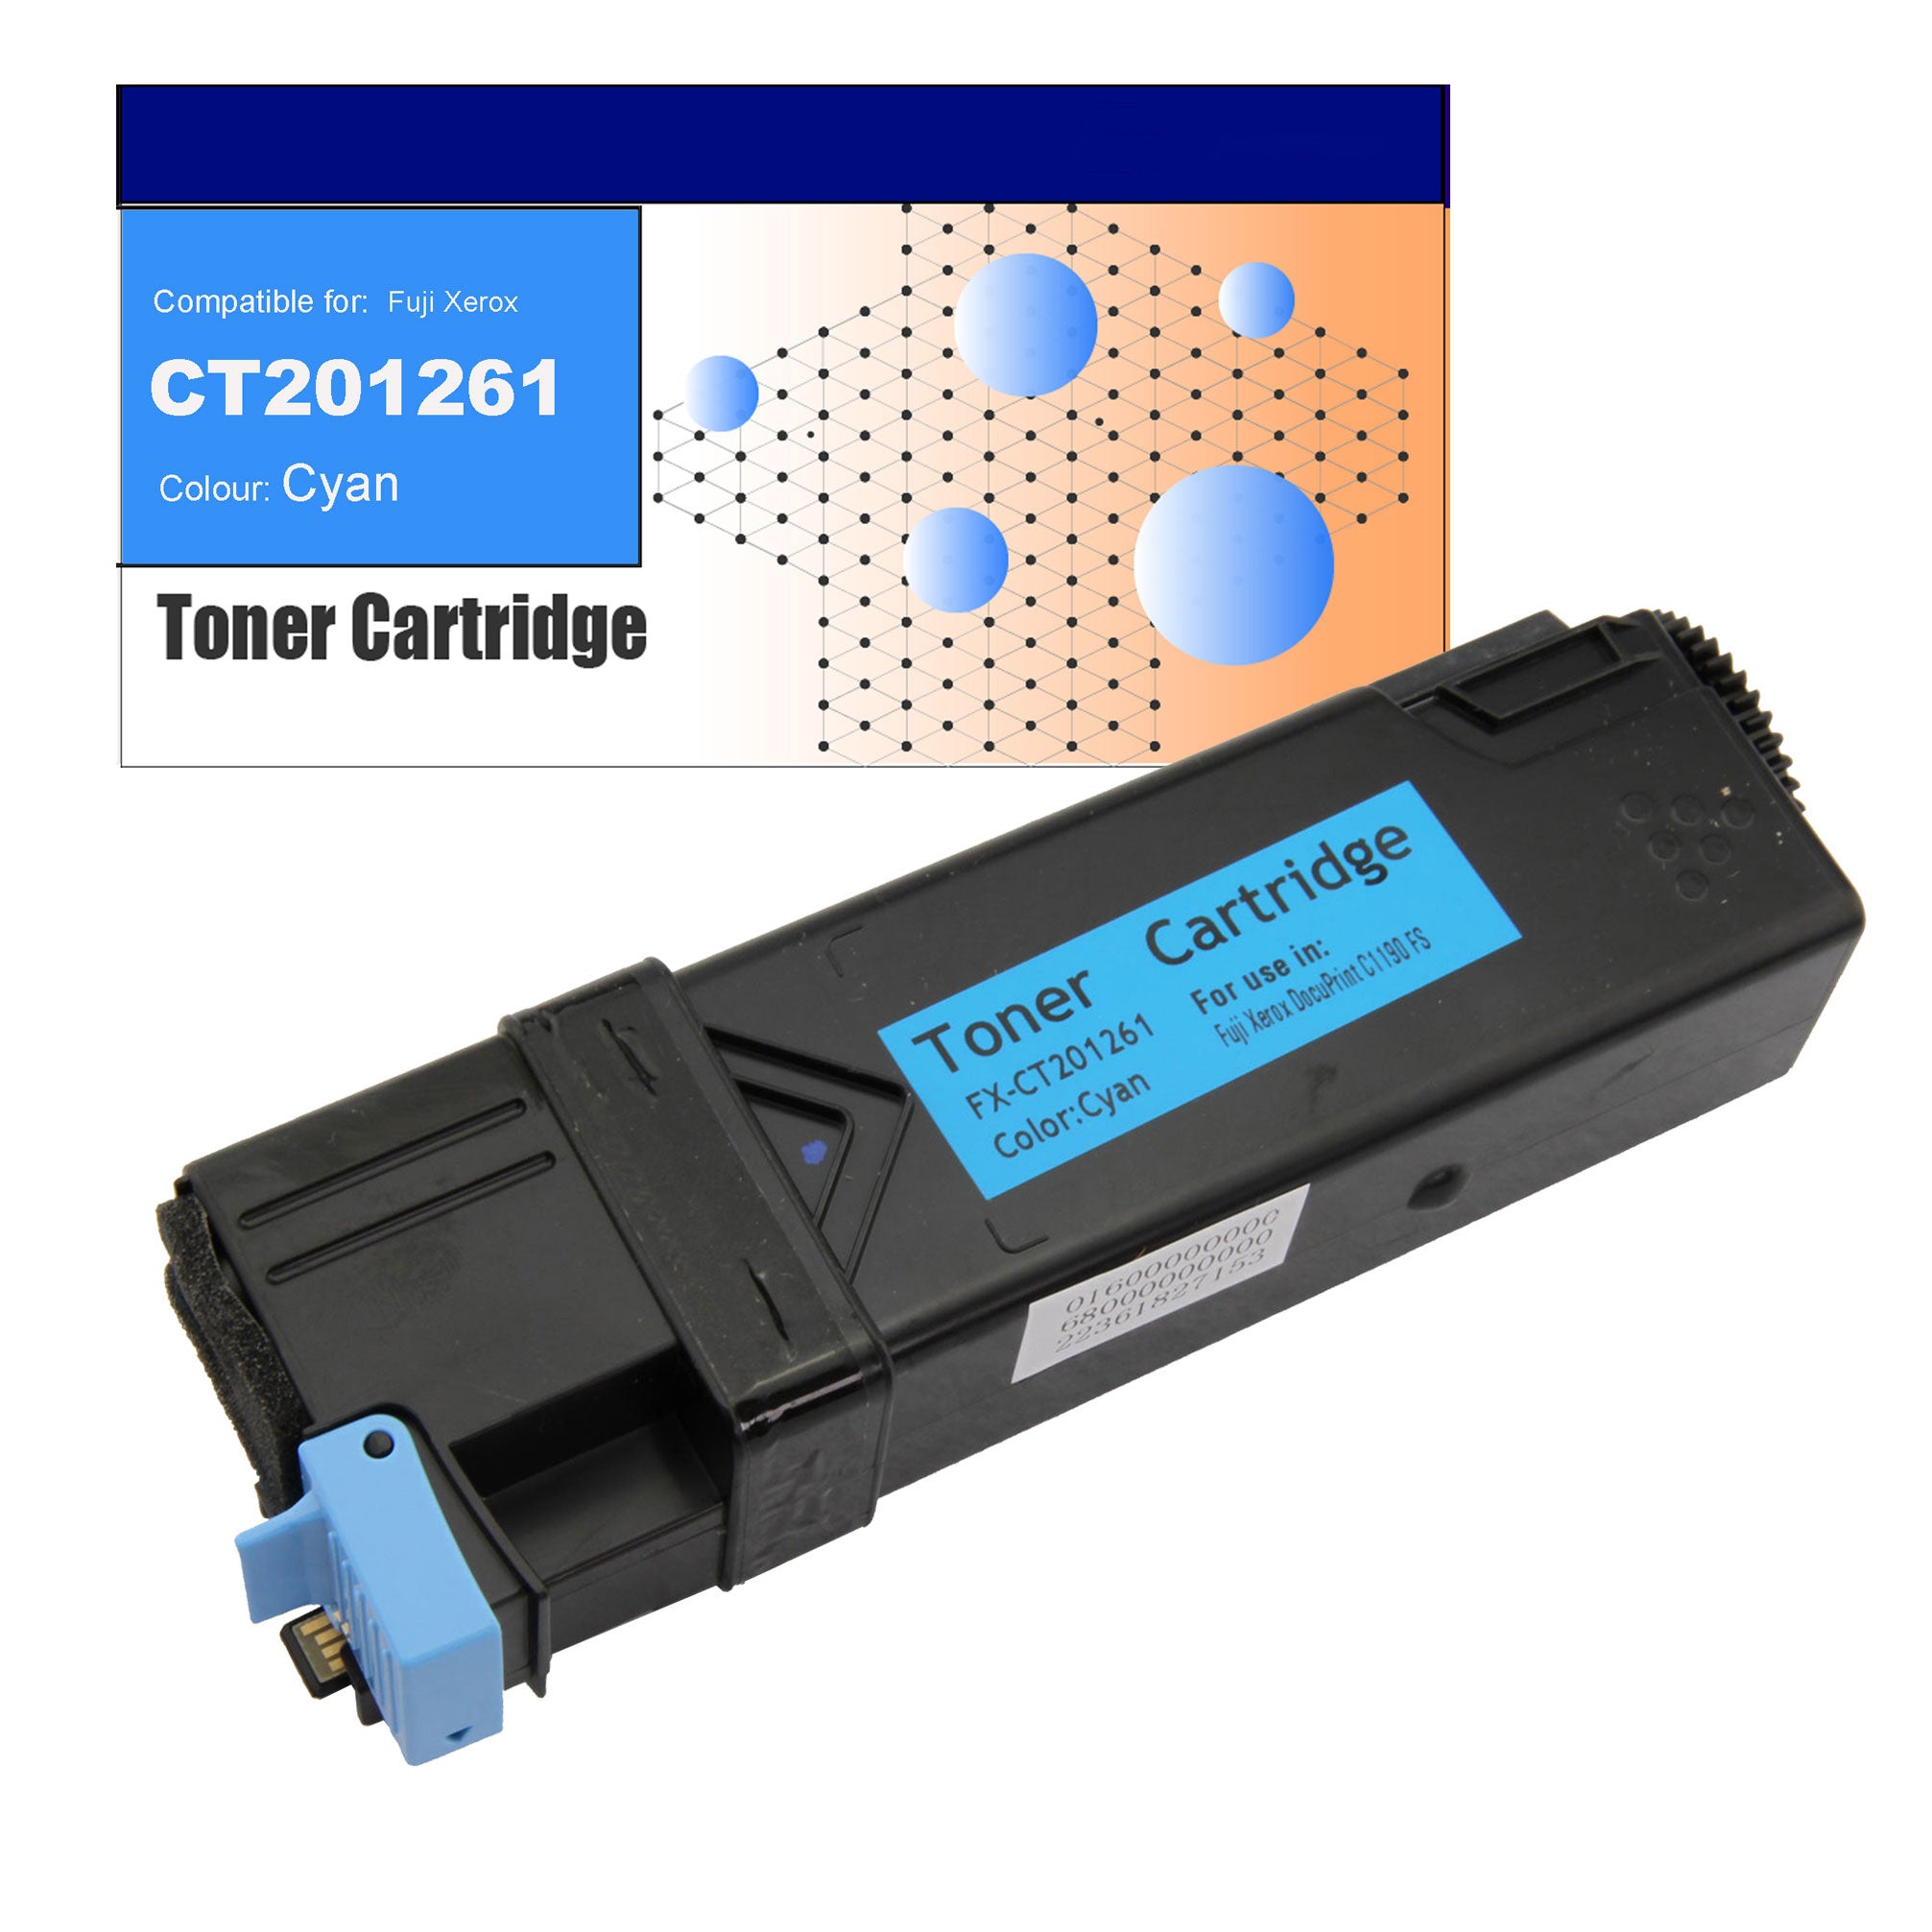 Compatible Toner for Fuji Xerox CT201261 (C1190) Cyan Toner Cartridges